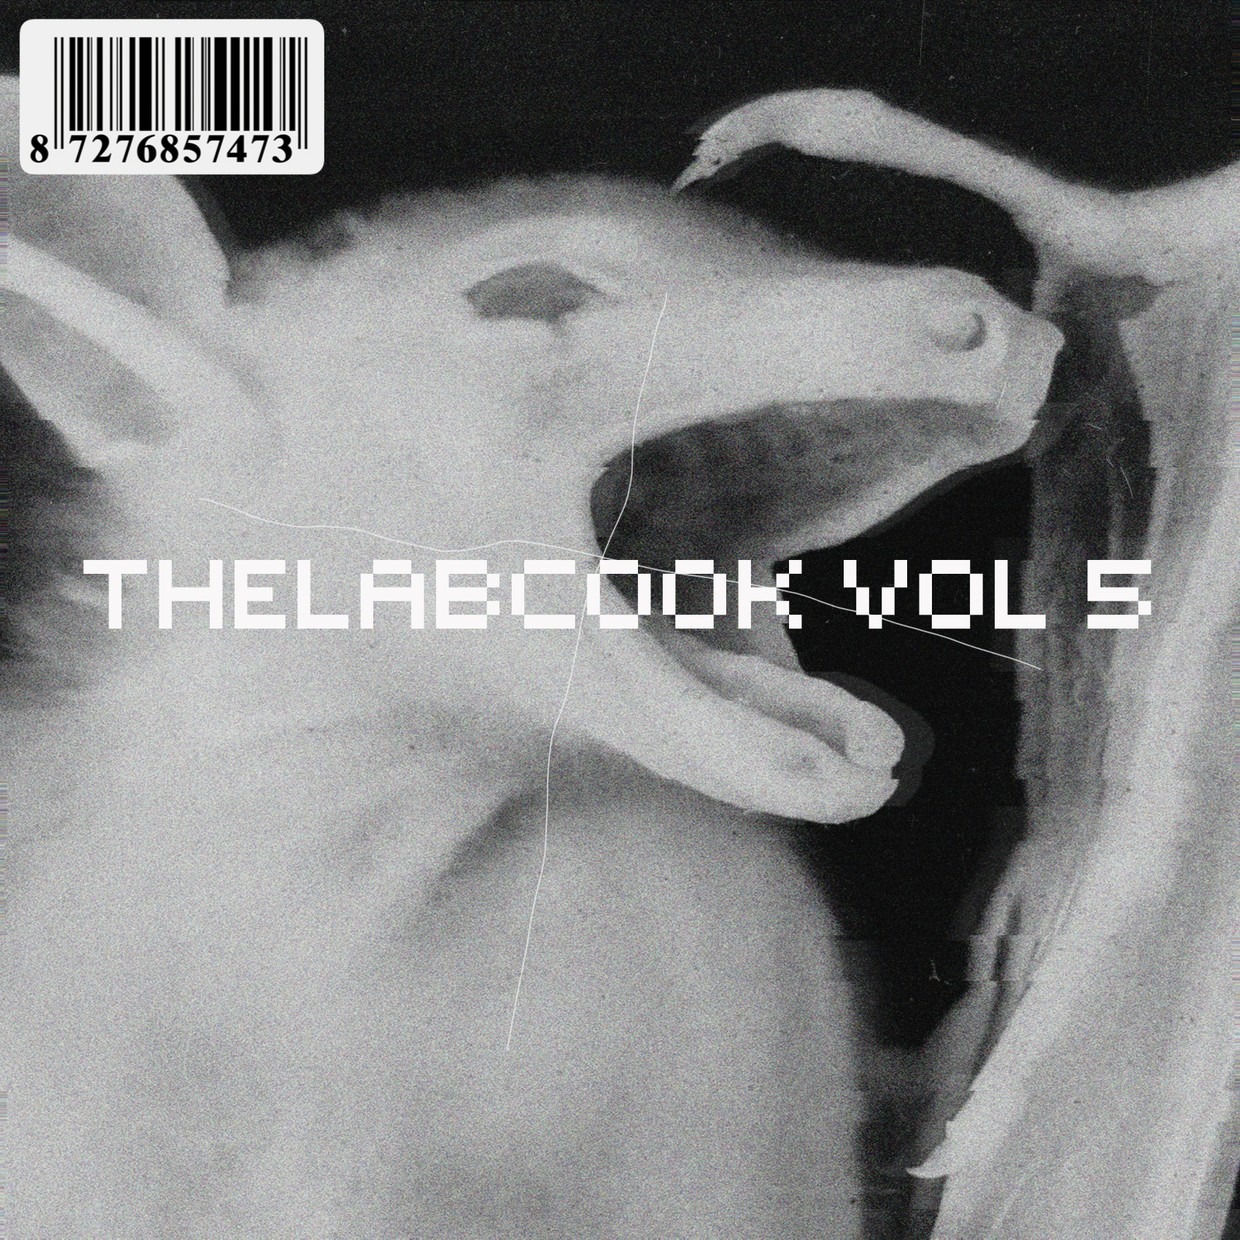 Thelabcook - Drum Kit Vol. 5